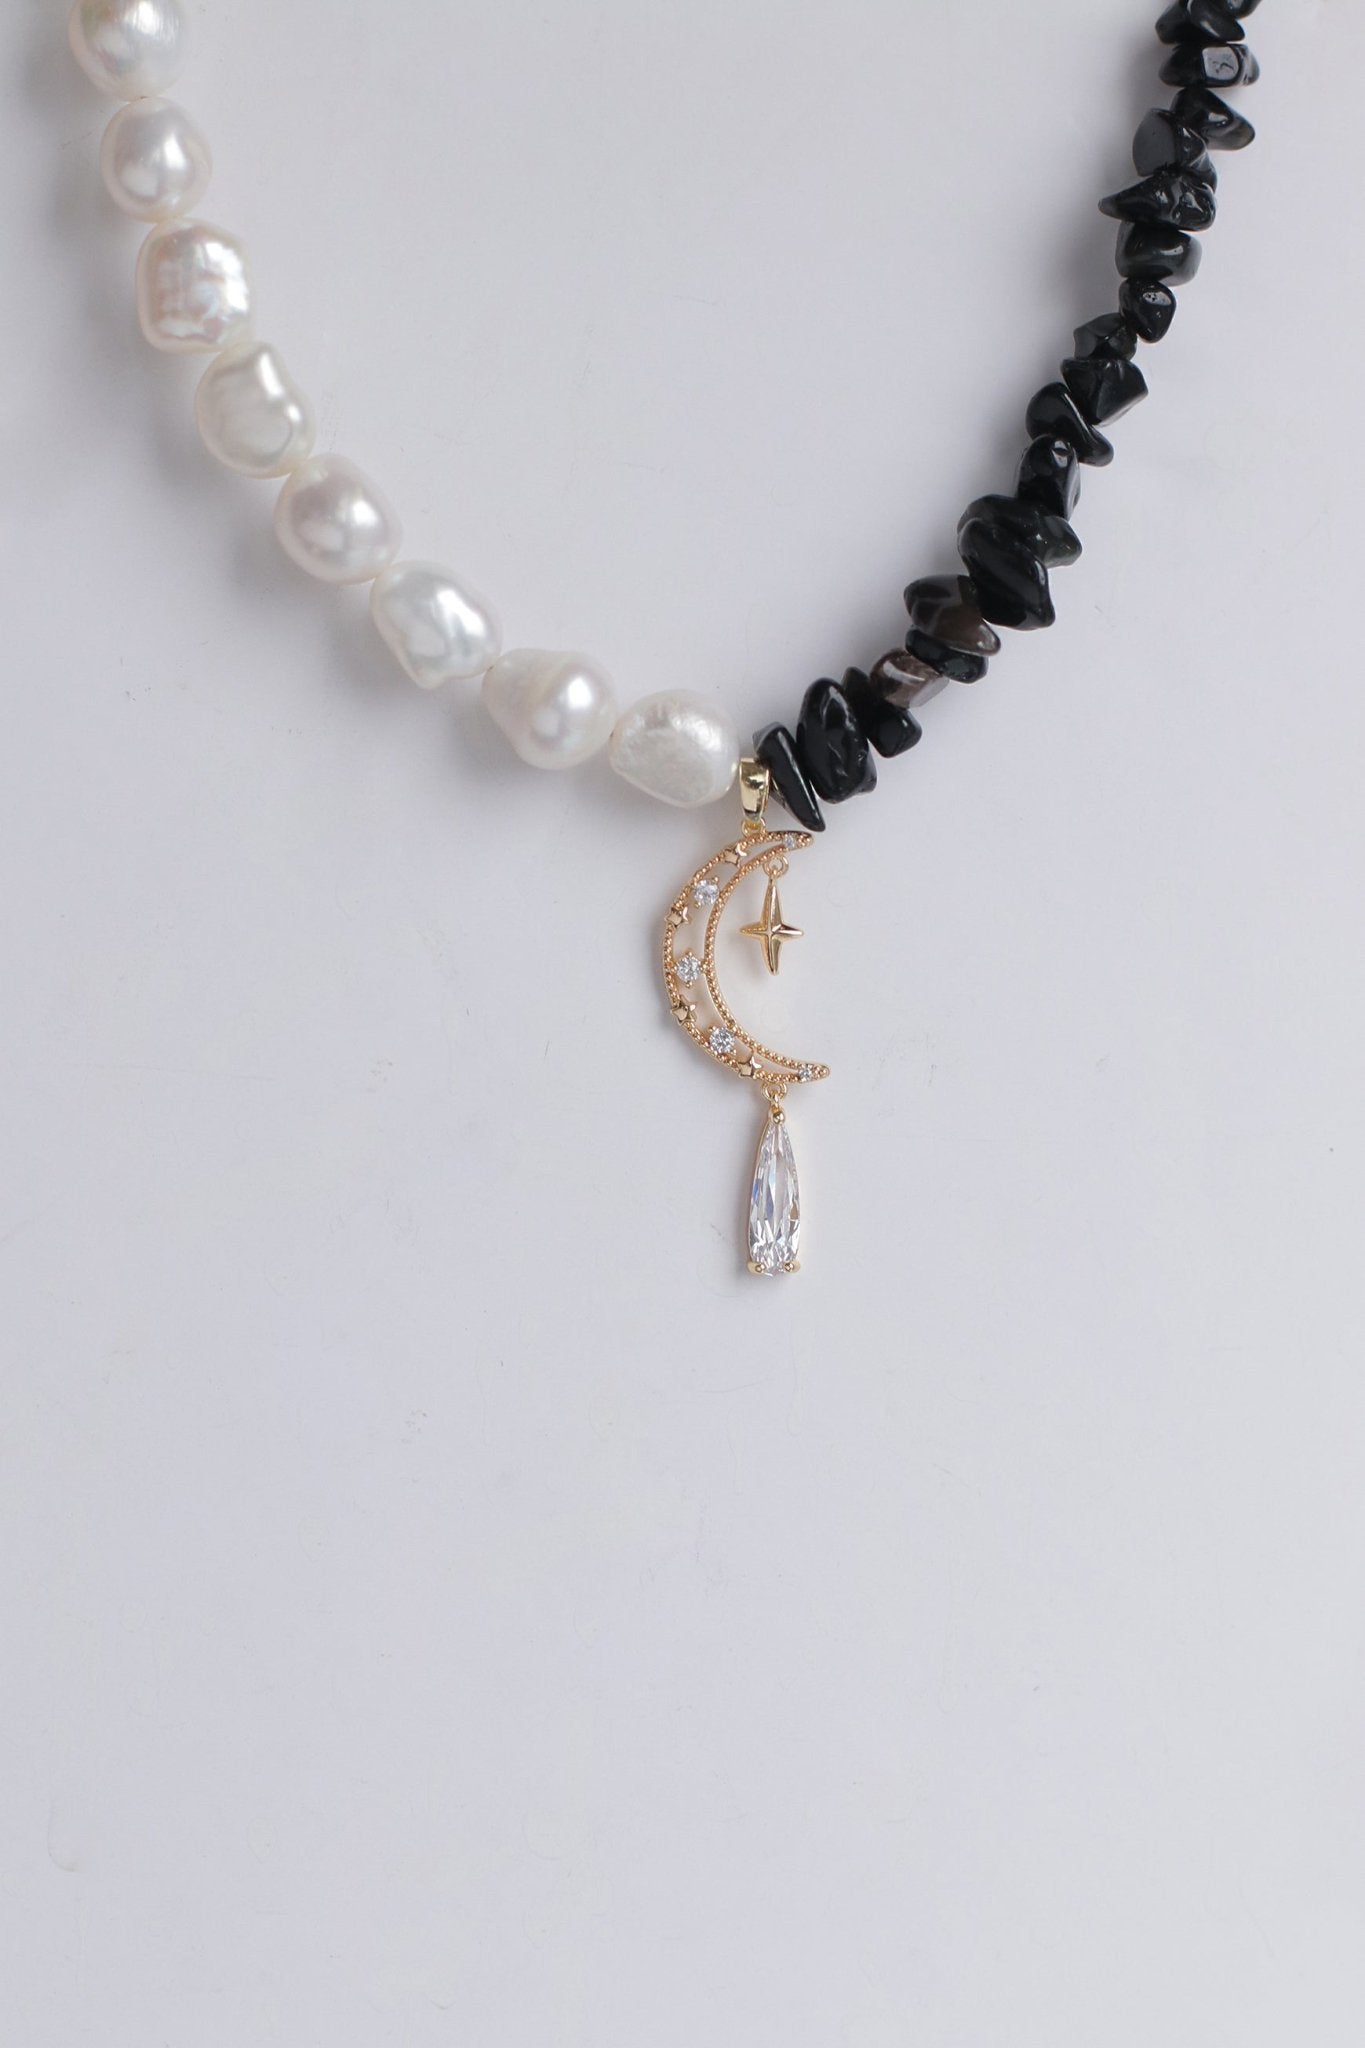 Yin-yang NecklaceNuma EstiloPearls and Obsidian Necklaces